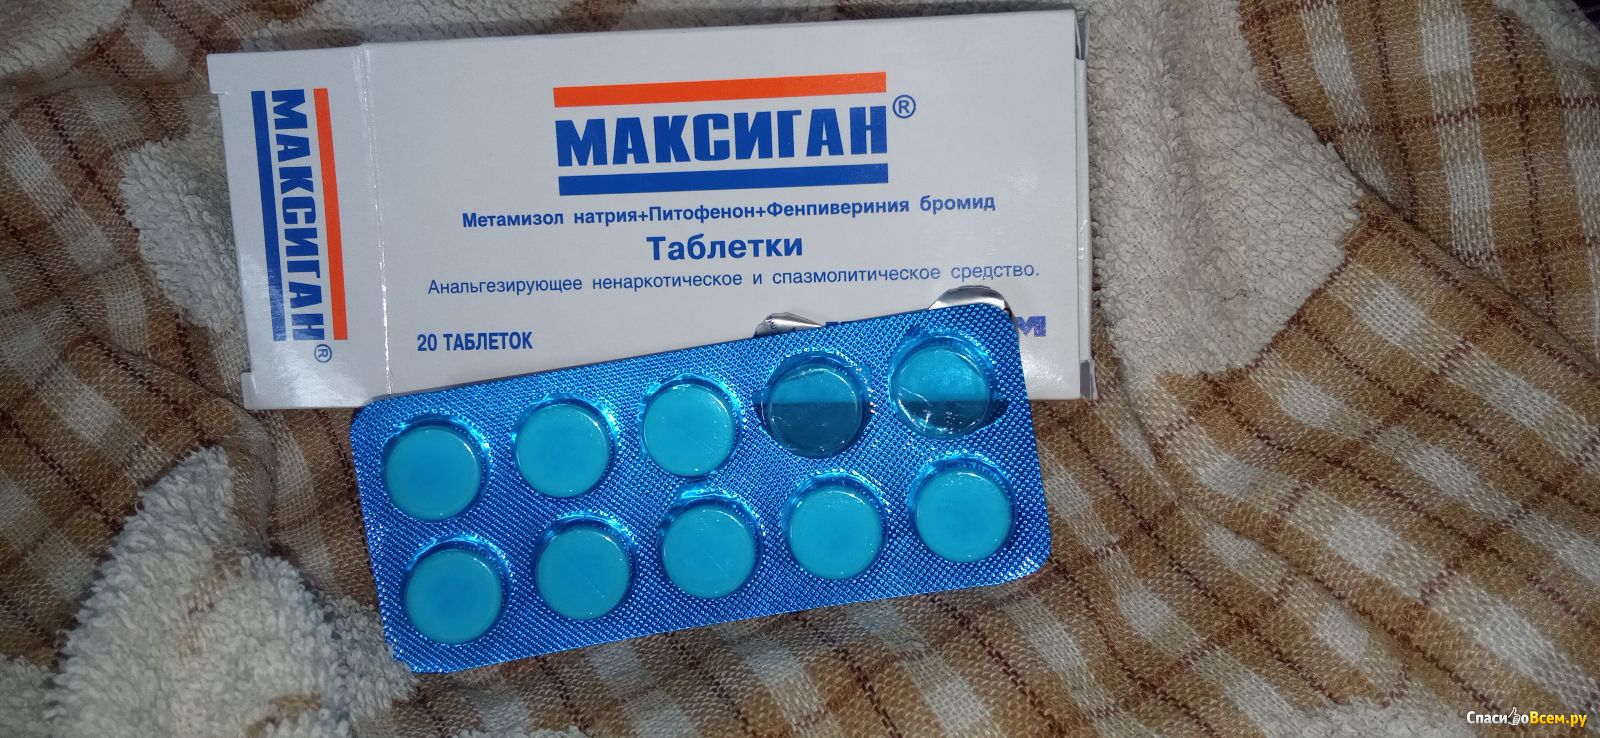 Обезболивающие таблетки. Максиган таблетки. Обезболивающие таблетки в синей упаковке. Недорогое обезболивающее в таблетках. Сильные обезболивающие таблетки после операции